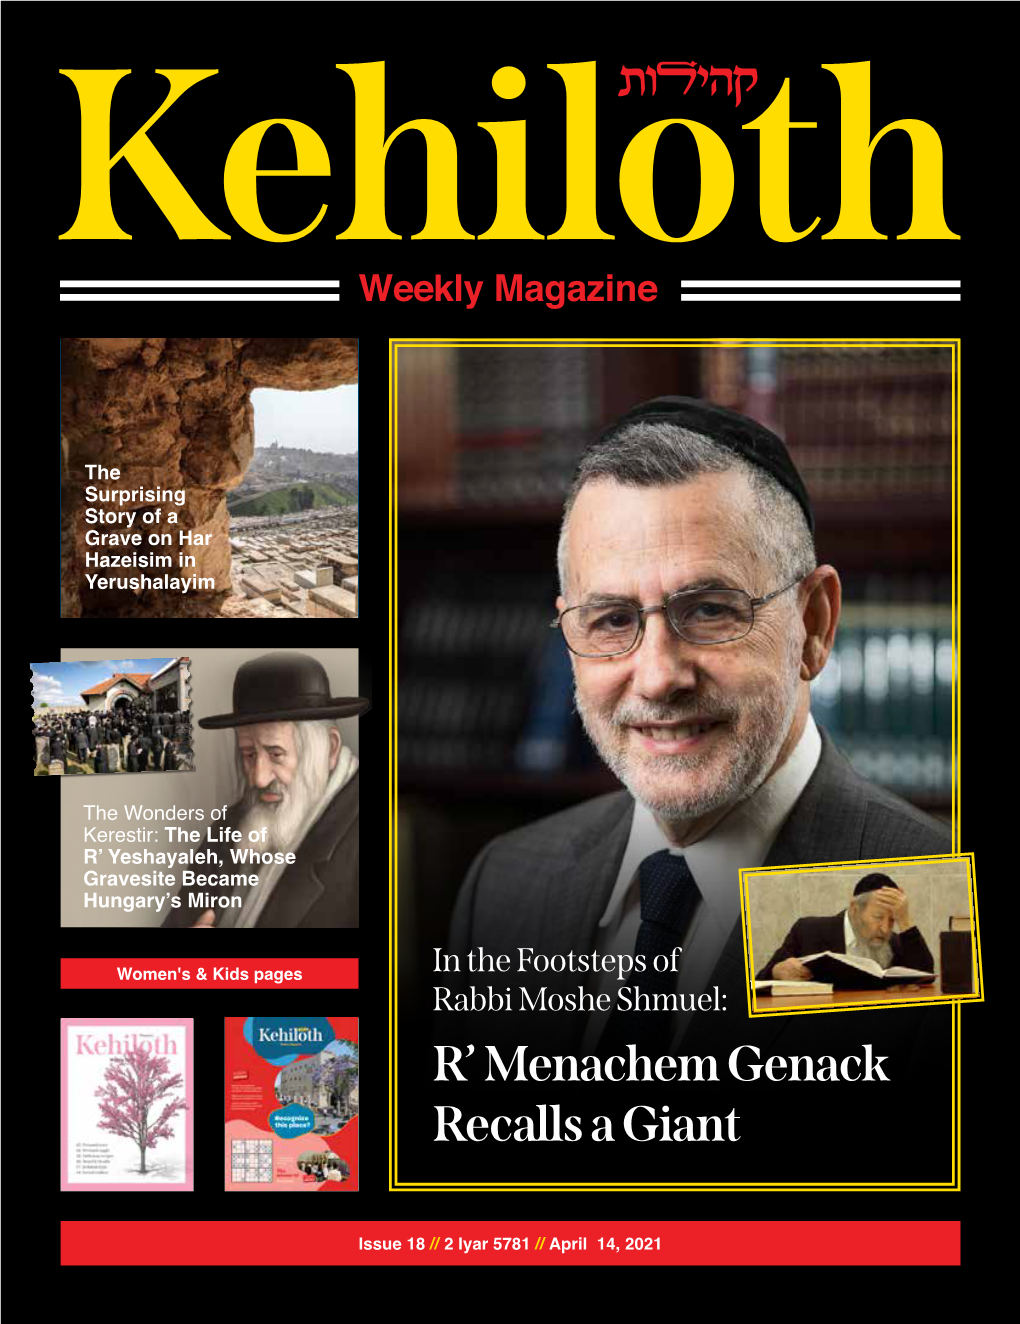 R' Menachem Genack Recalls a Giant